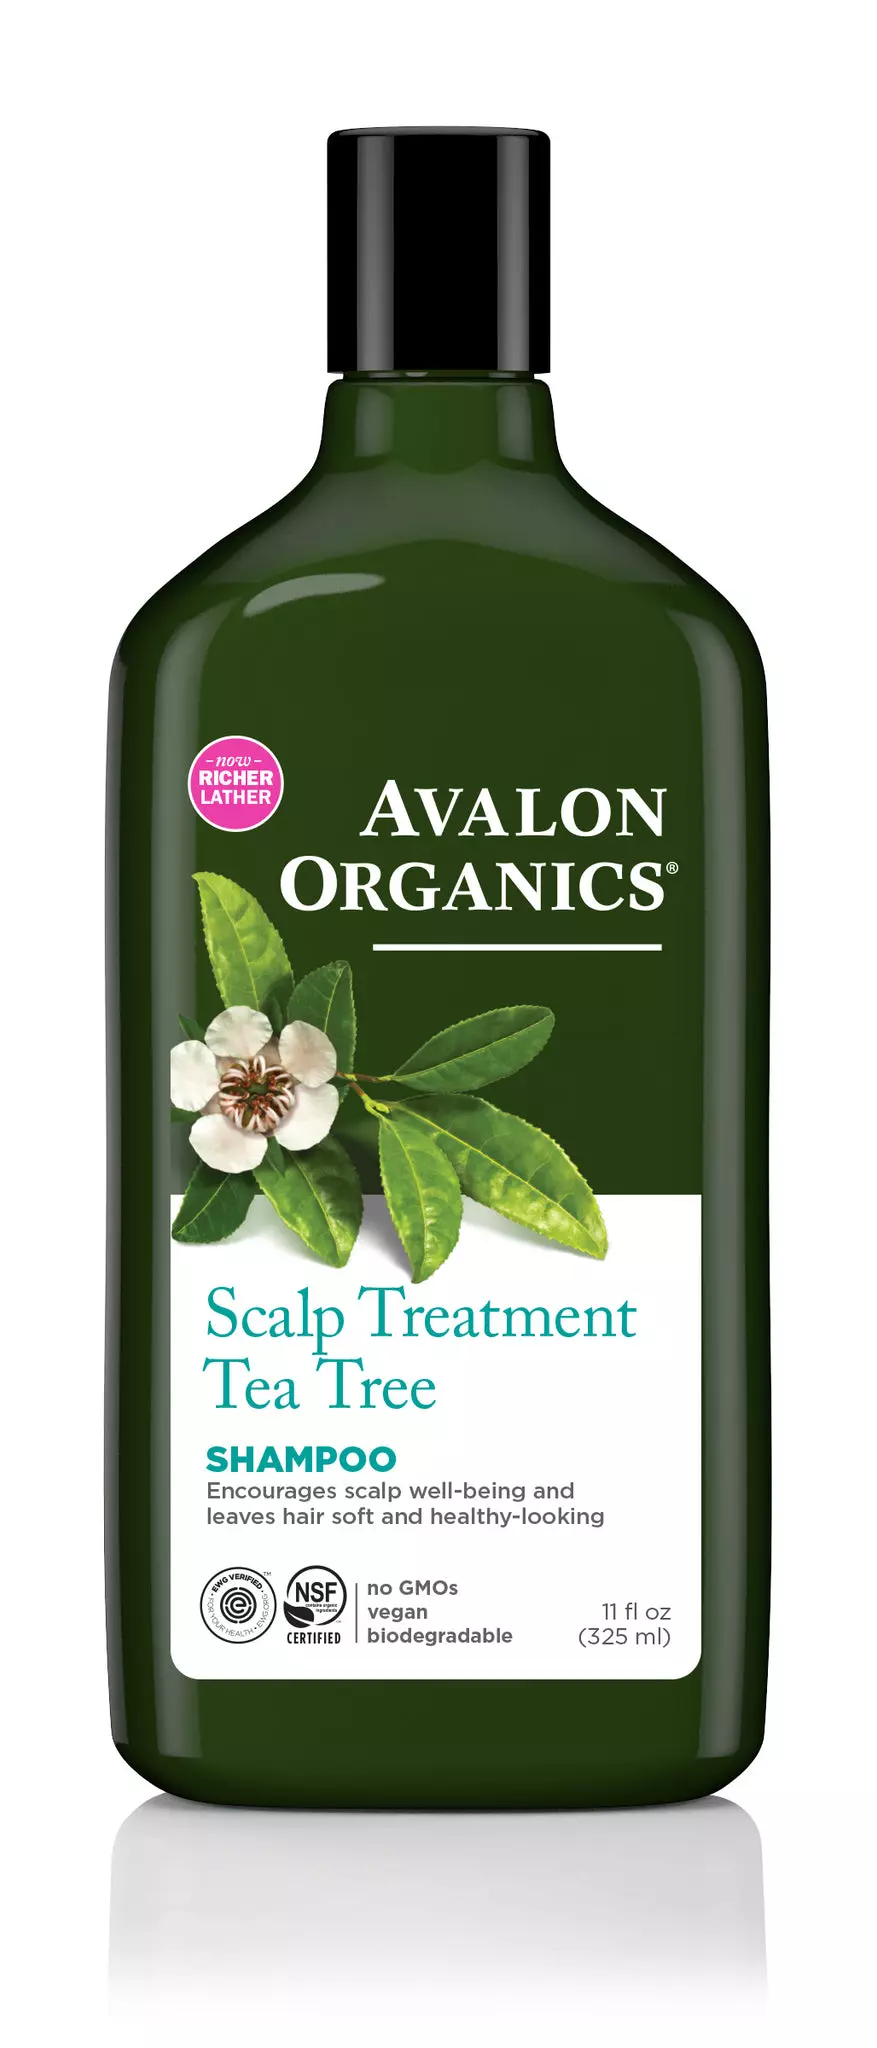 Avalon Organics Scalp Treatment Shampoo, Tea Tree, 32 Oz 32 Fl Oz (Pack of 1)